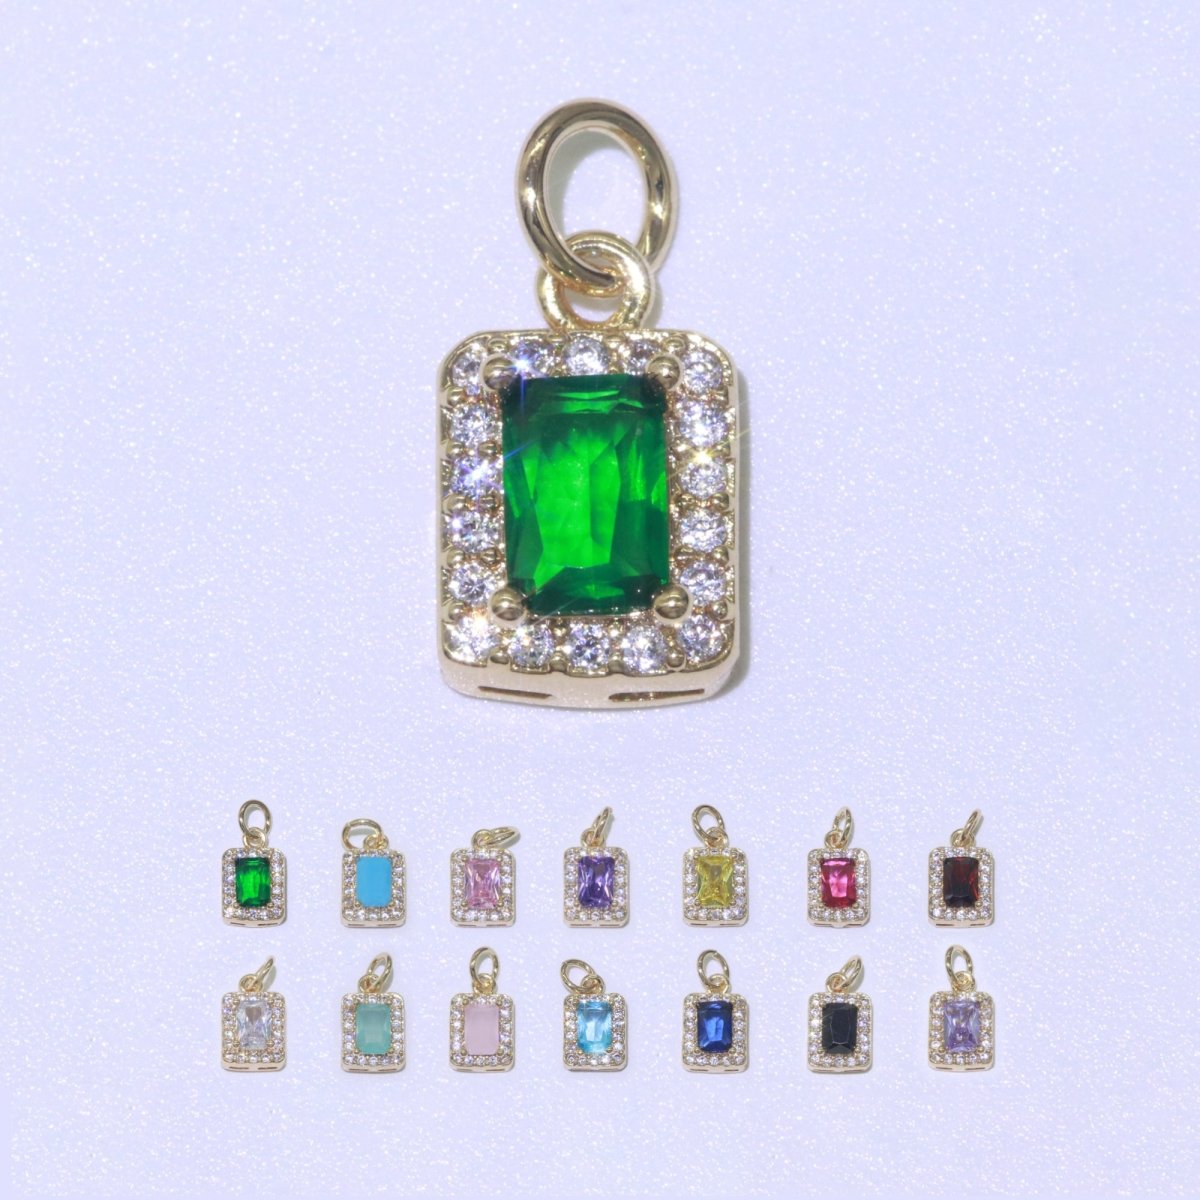 14k Gold Filled Micro Pave CZ Geometric Pendant Charm Emerald Cut Pendant Charm Geometric DIY Jewelry 8.8x7.3mm M-189-M-202 - DLUXCA